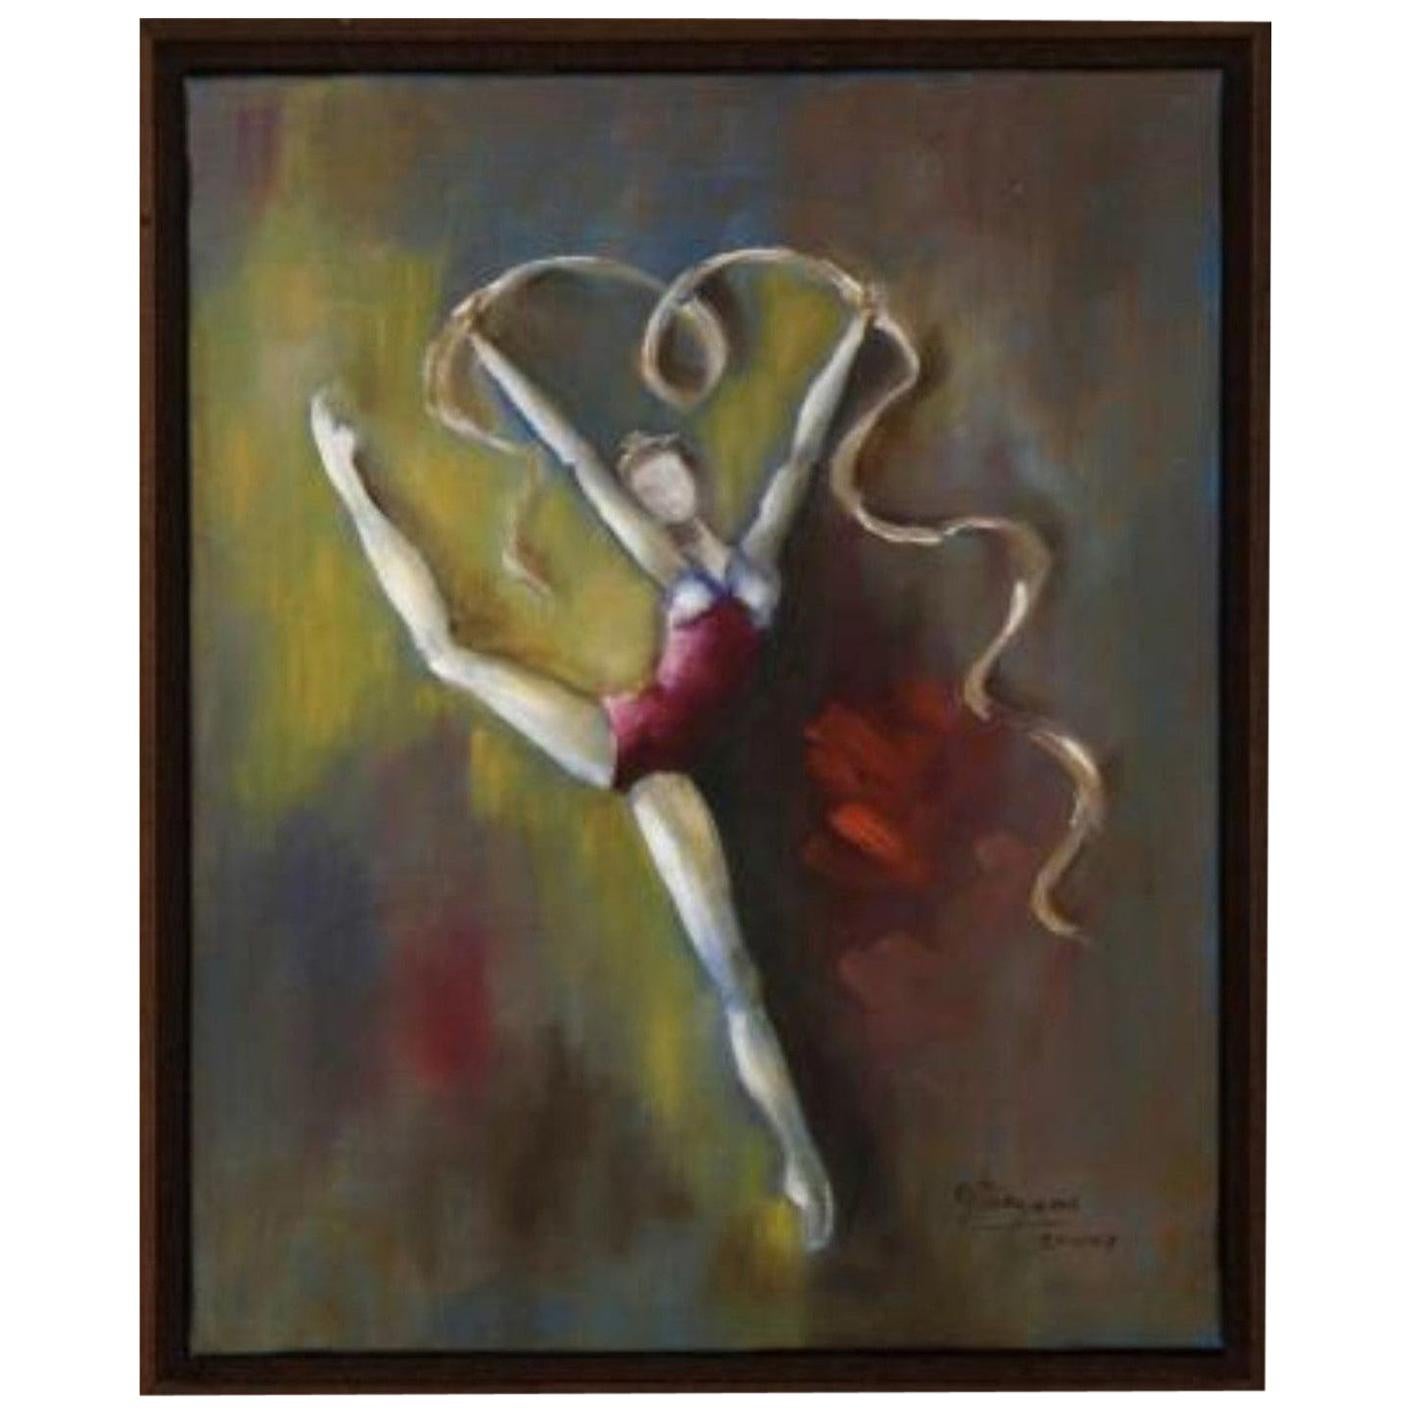 Ballerine moderniste, huile sur toile "Bailarina" par Olga Pargana, datée de 2002, signée